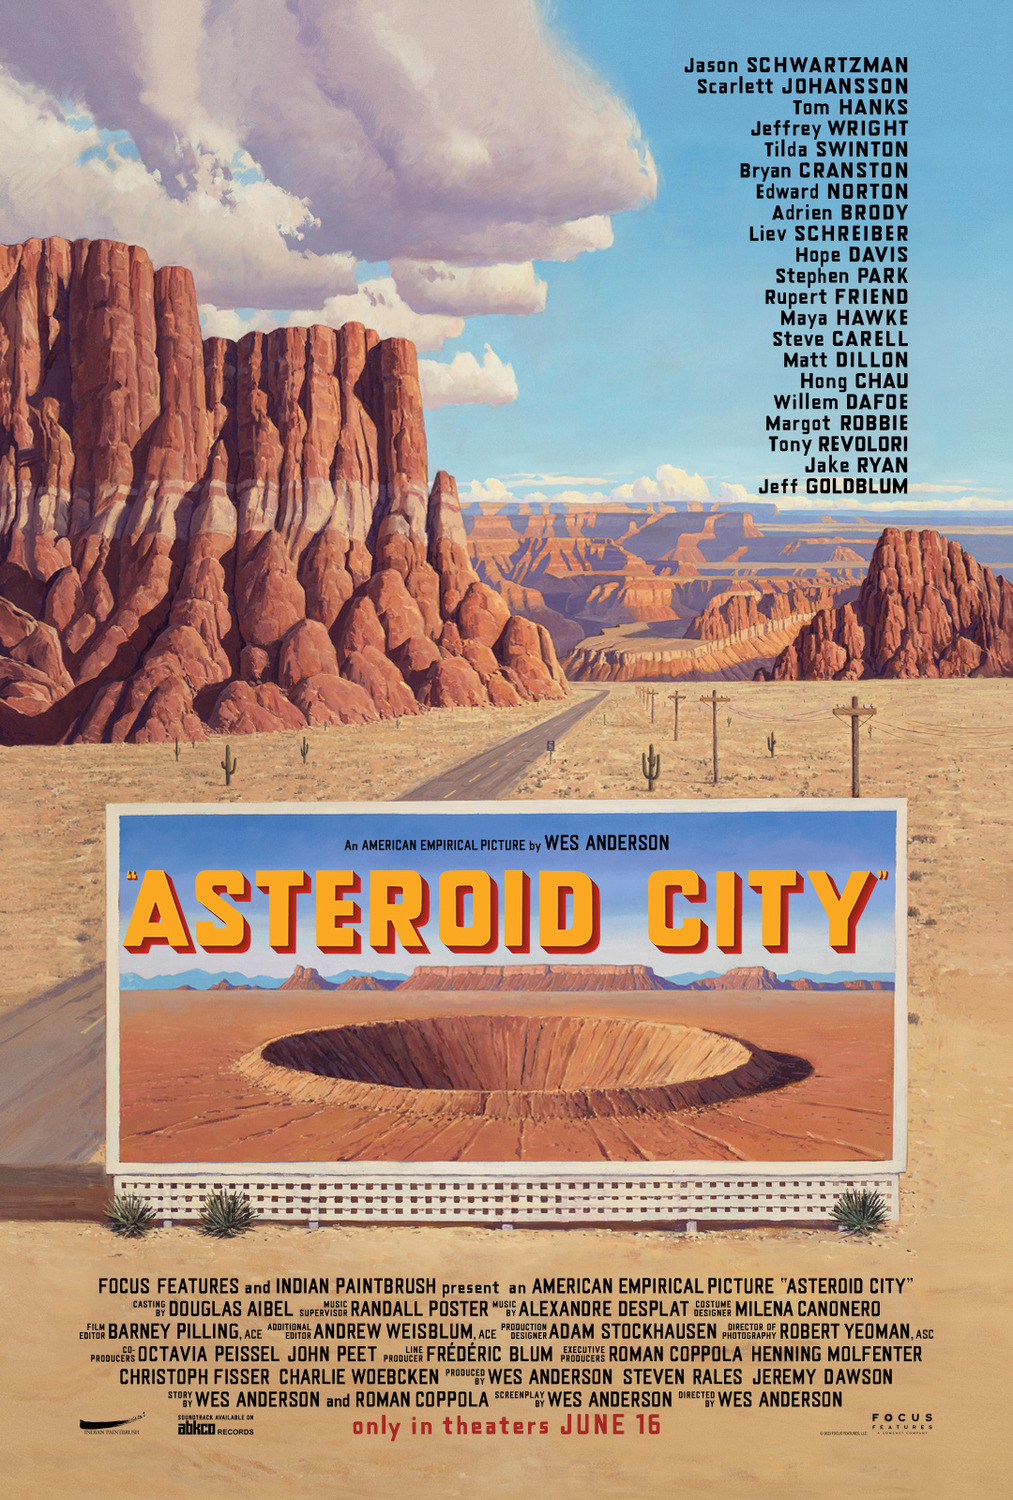 Asteroïd City